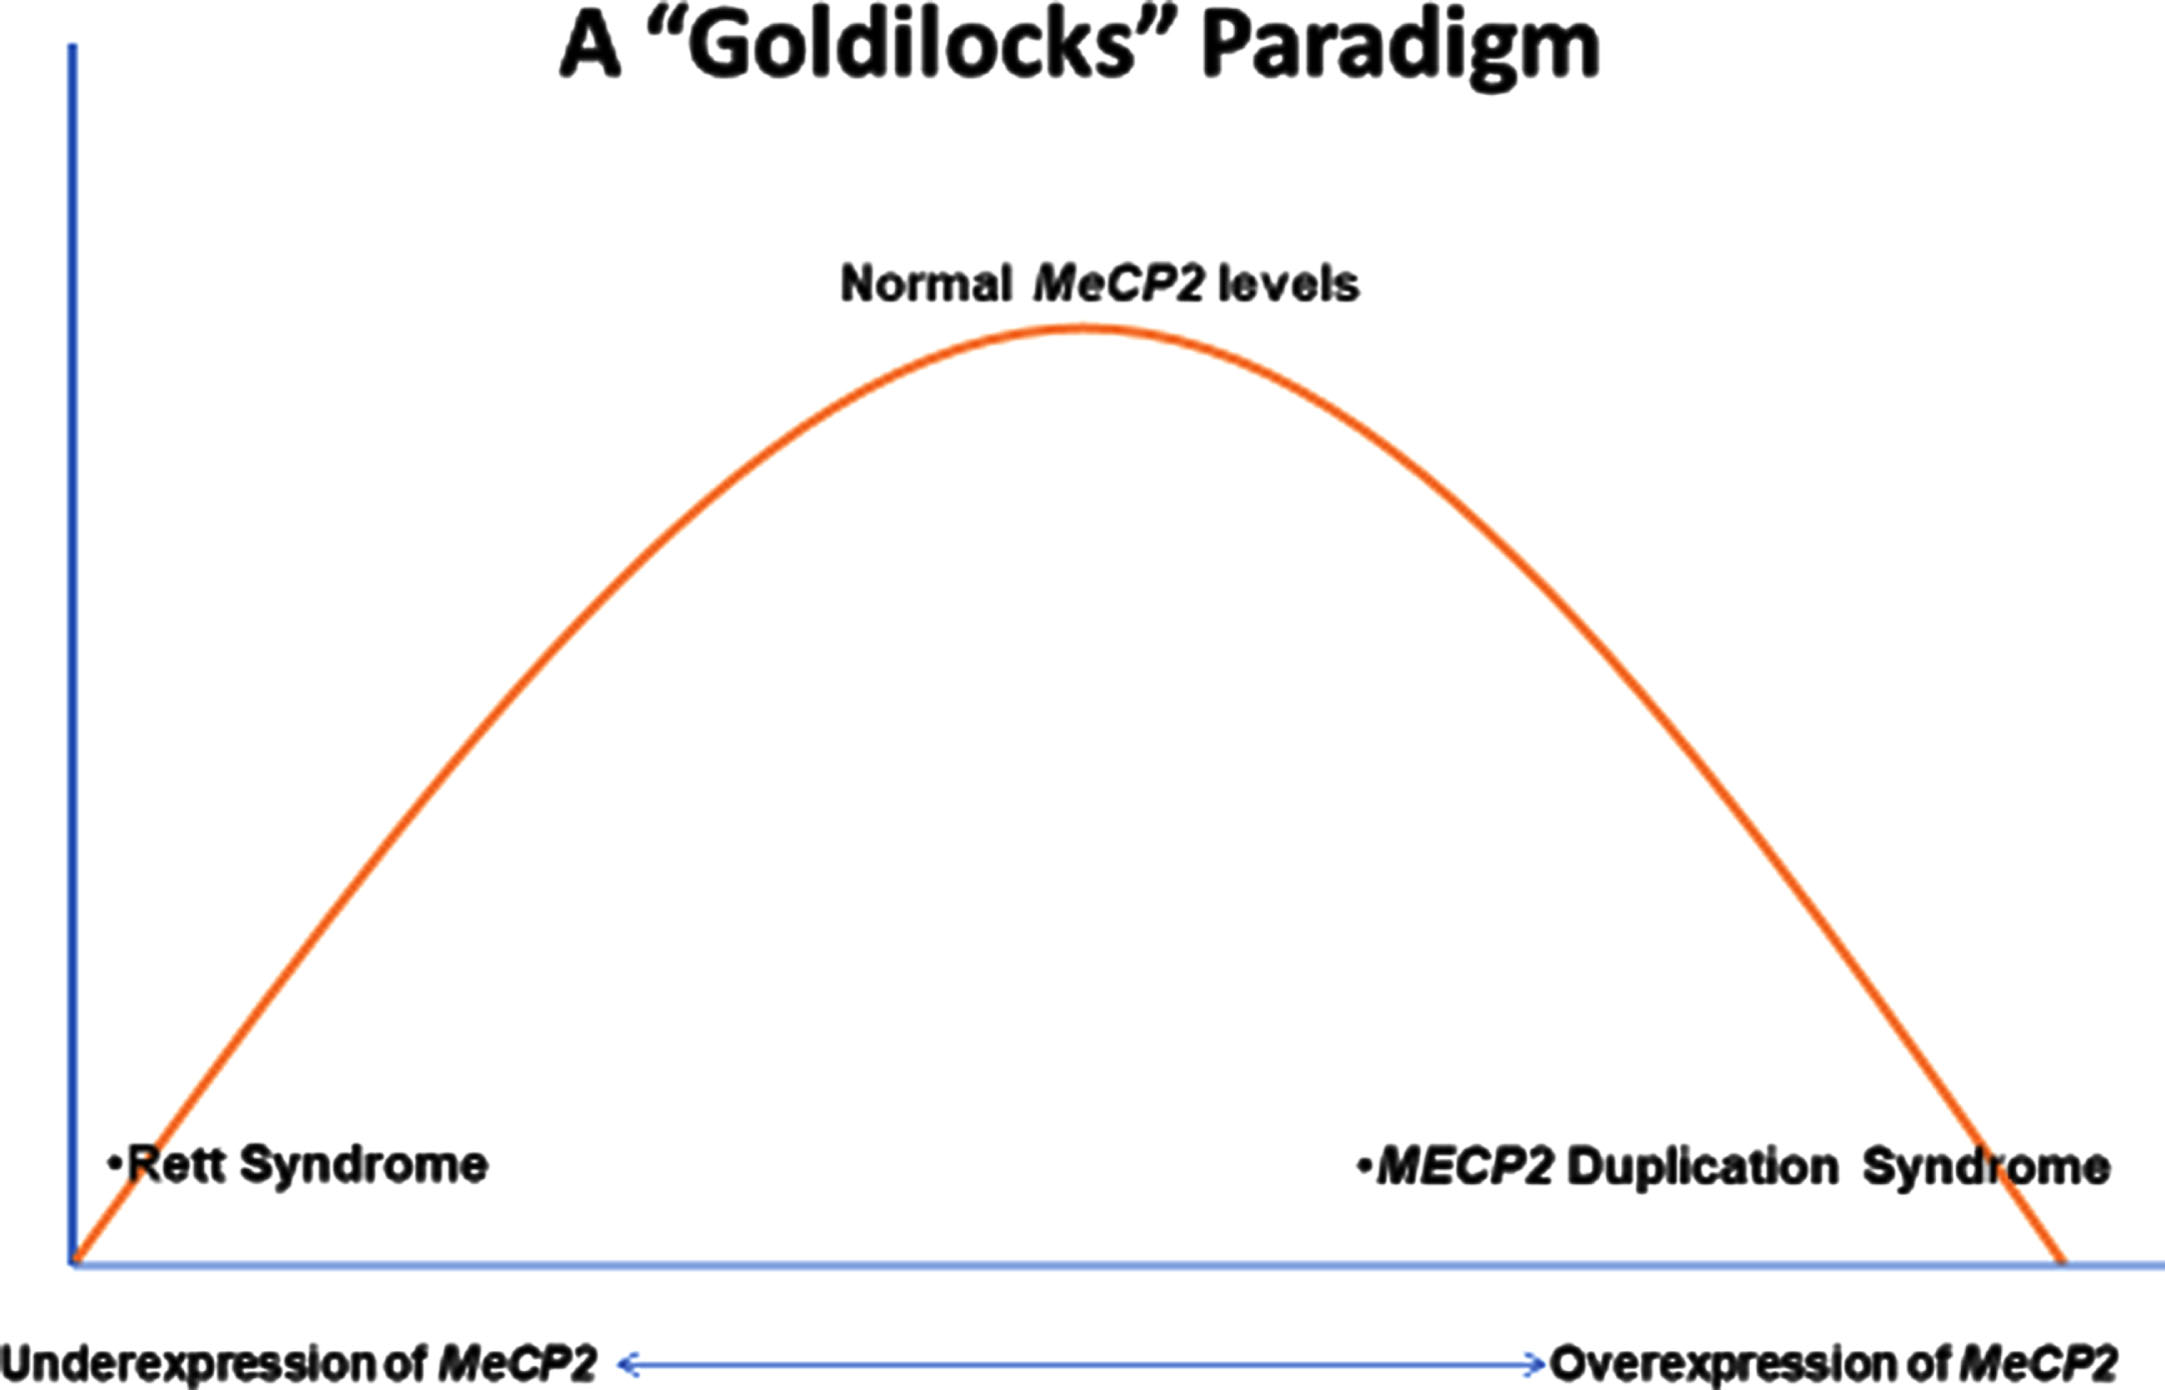 The goldilocks paradigm.